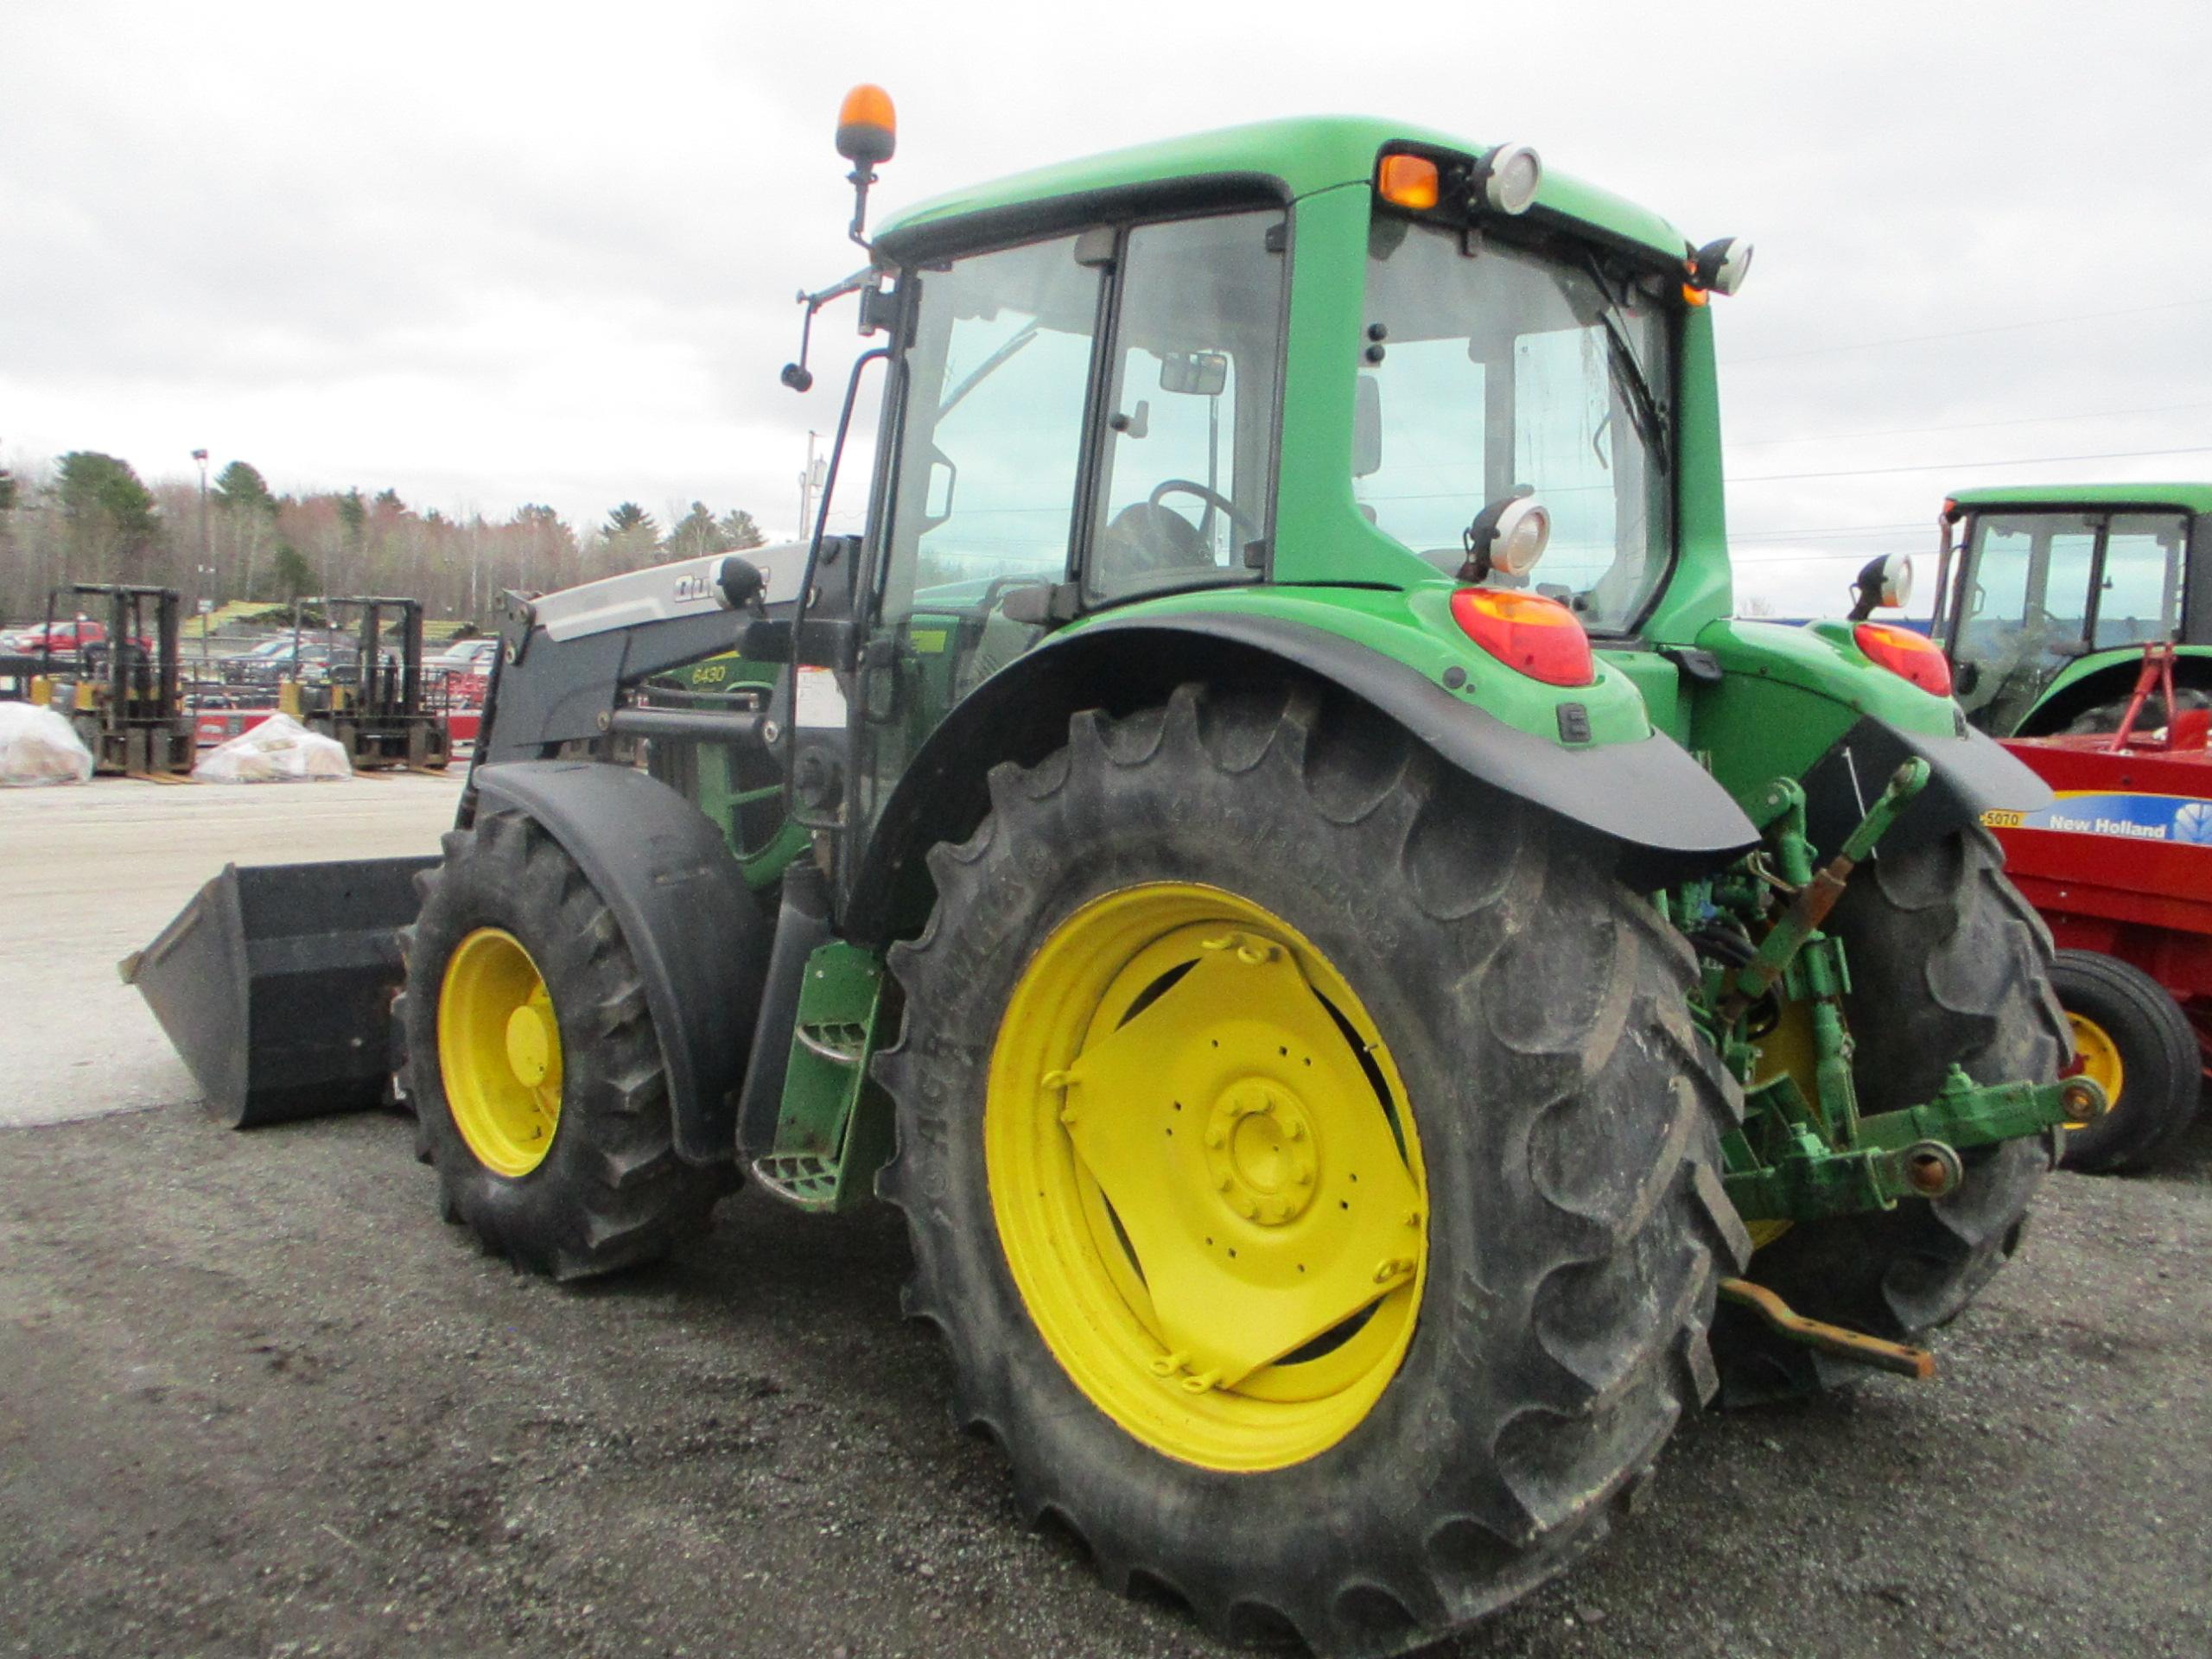 2010 JD 6430 Premium Farm Tractor